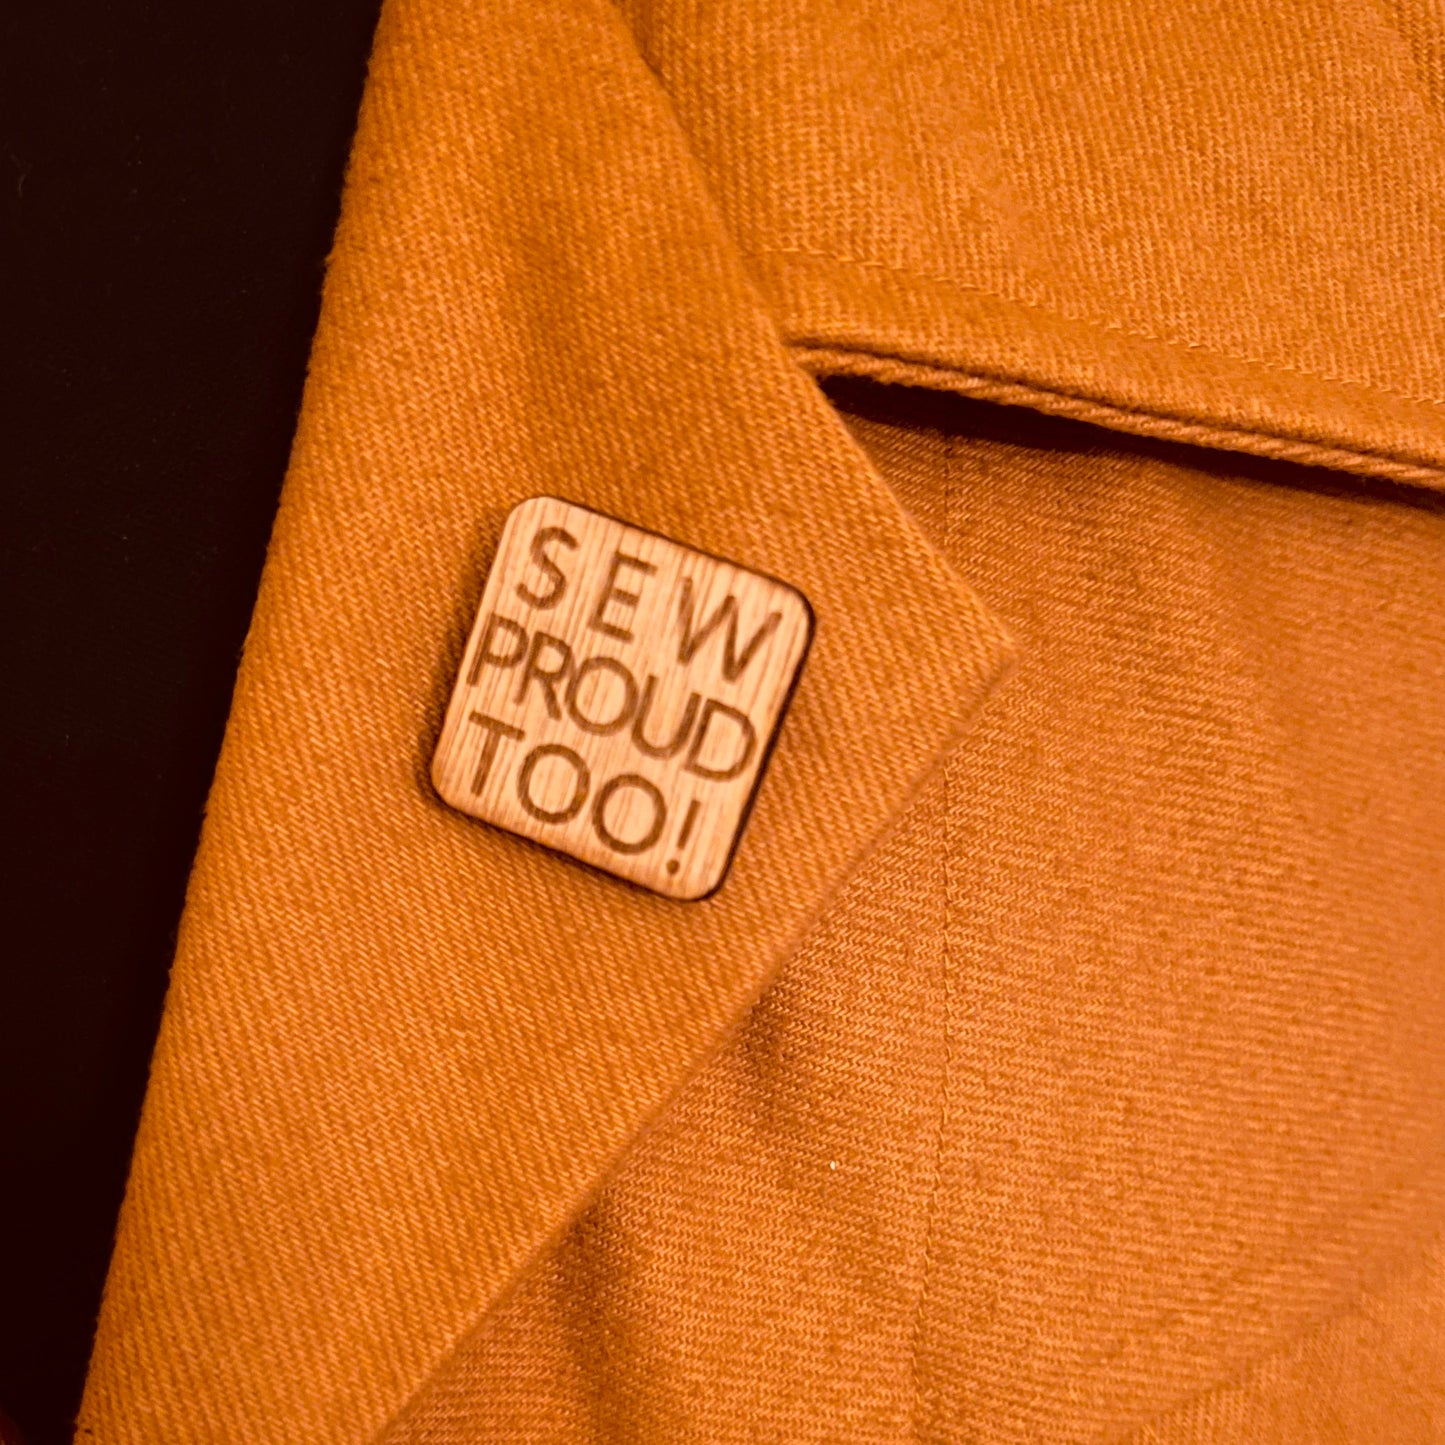 Sew Proud Too! Pin Badge